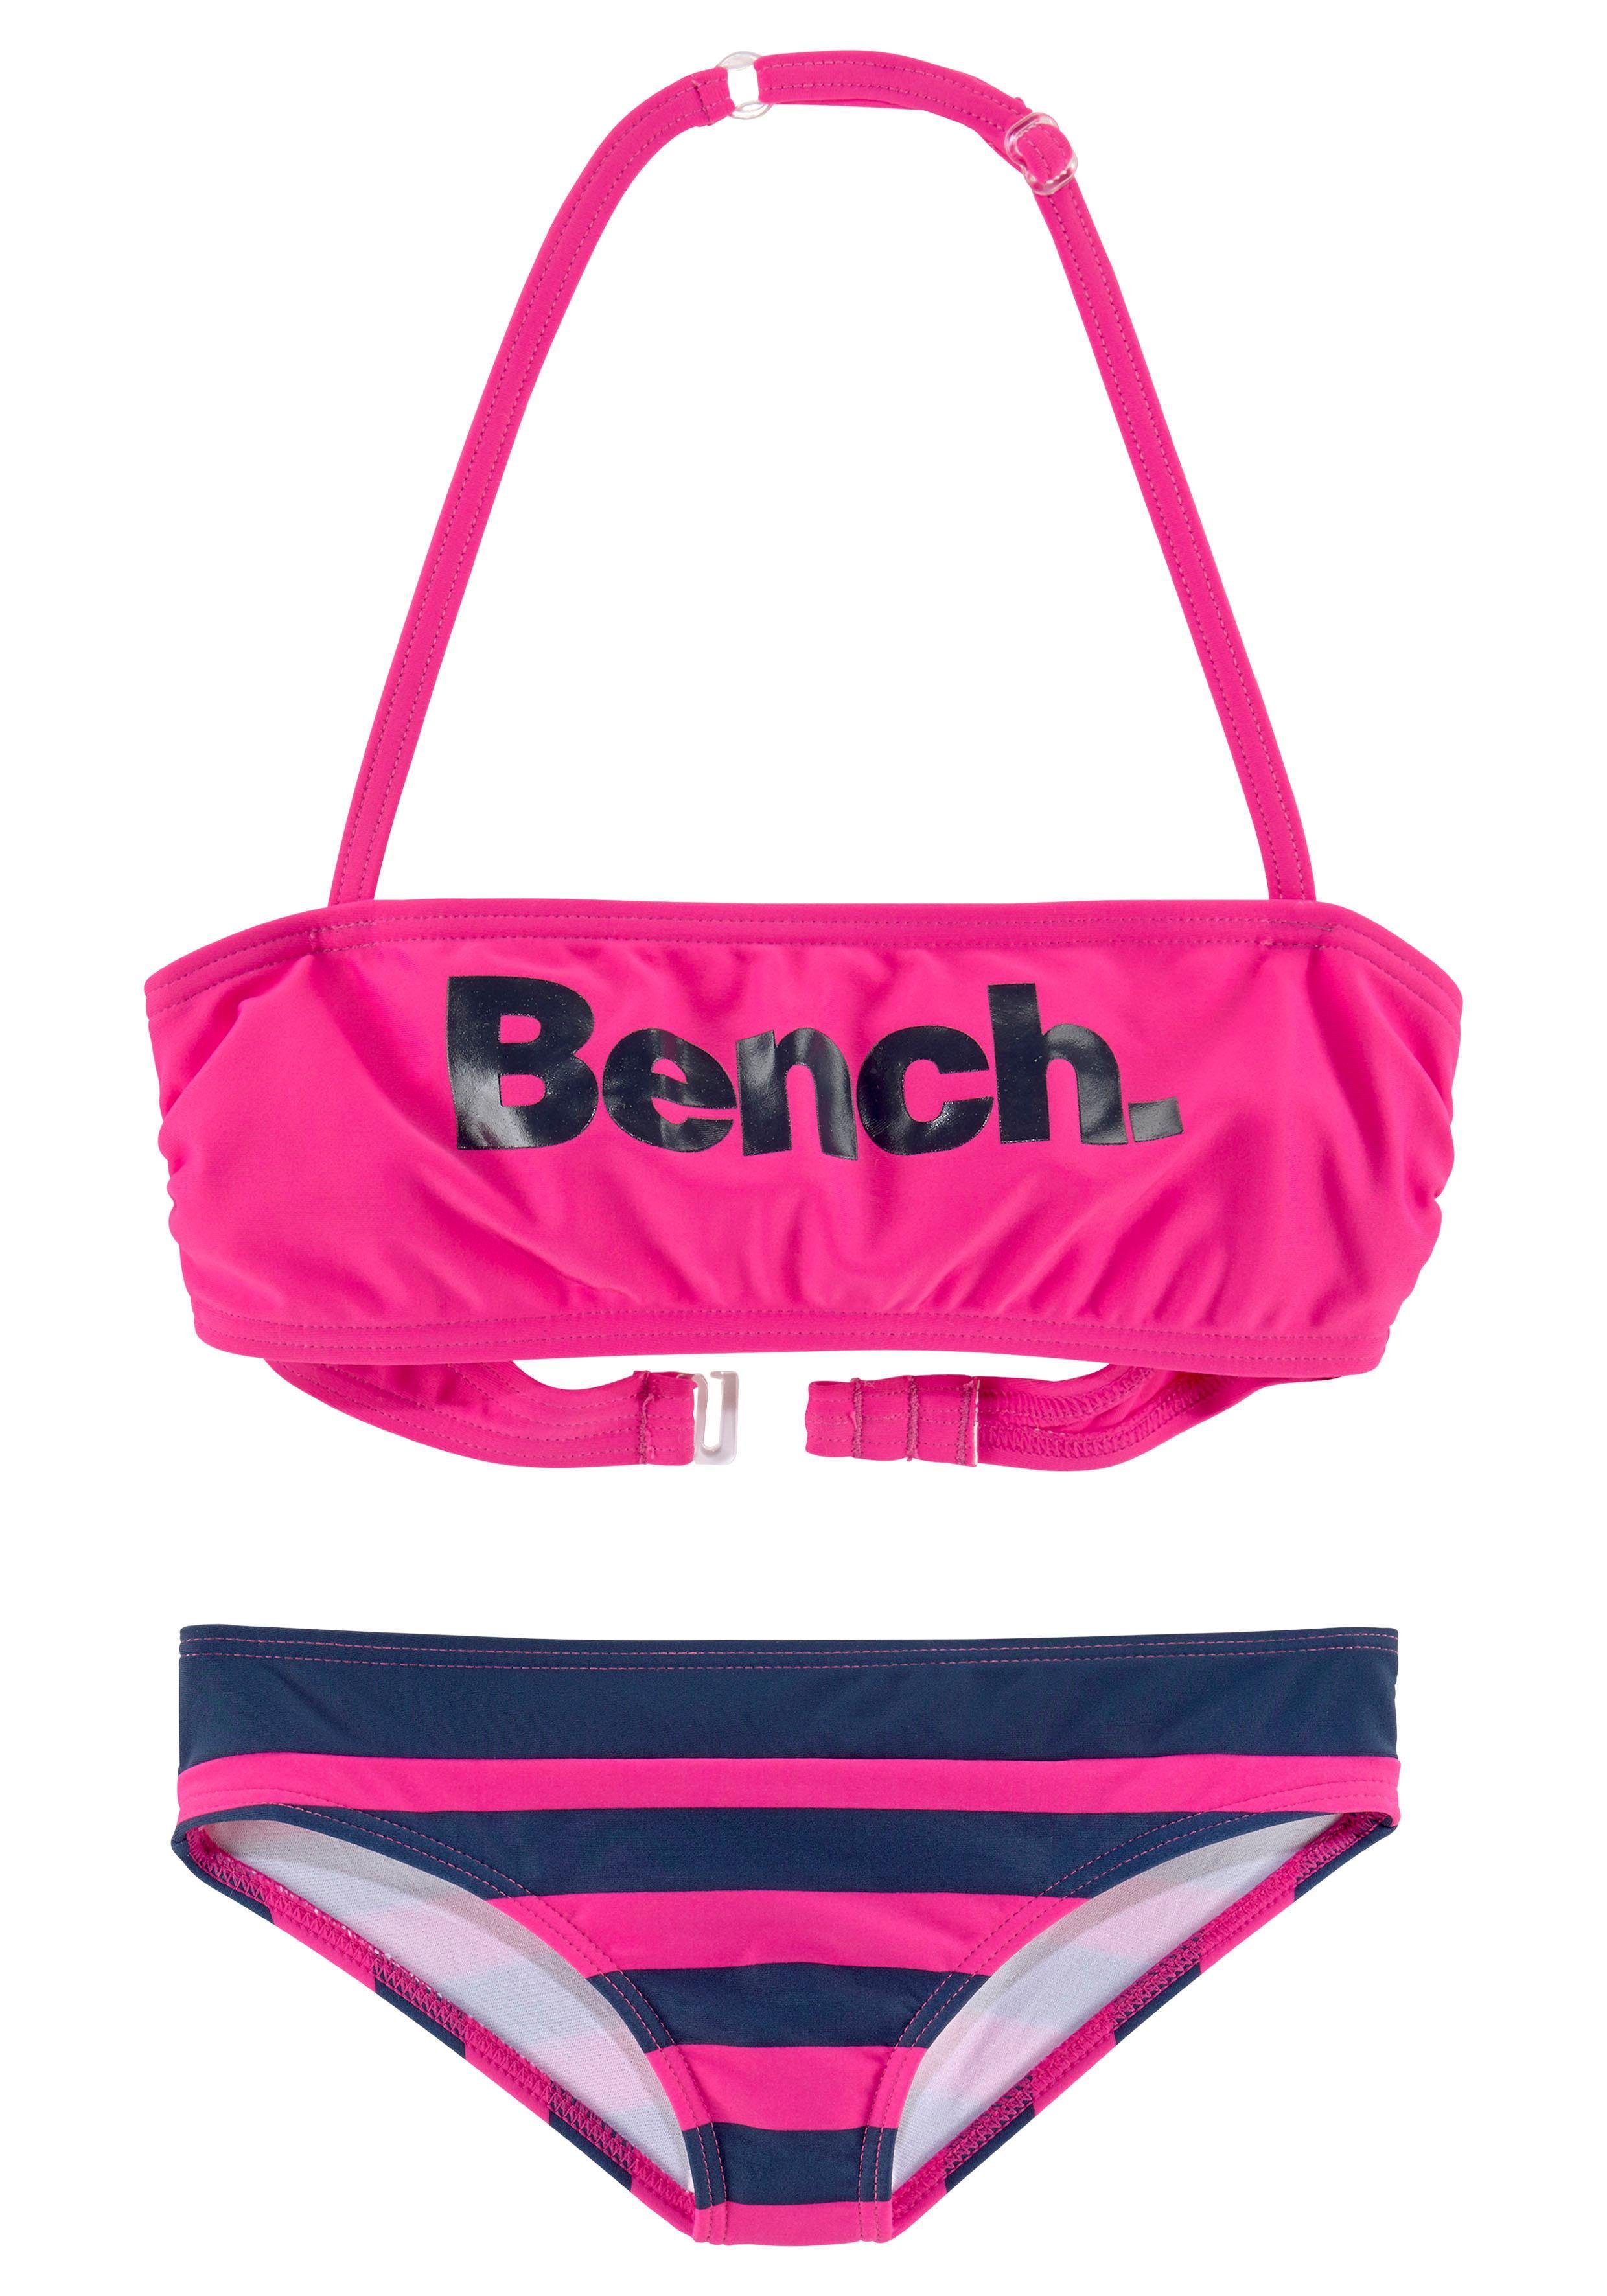 Bandeau-Bikini Logoprint pink-marine großem mit Bench.